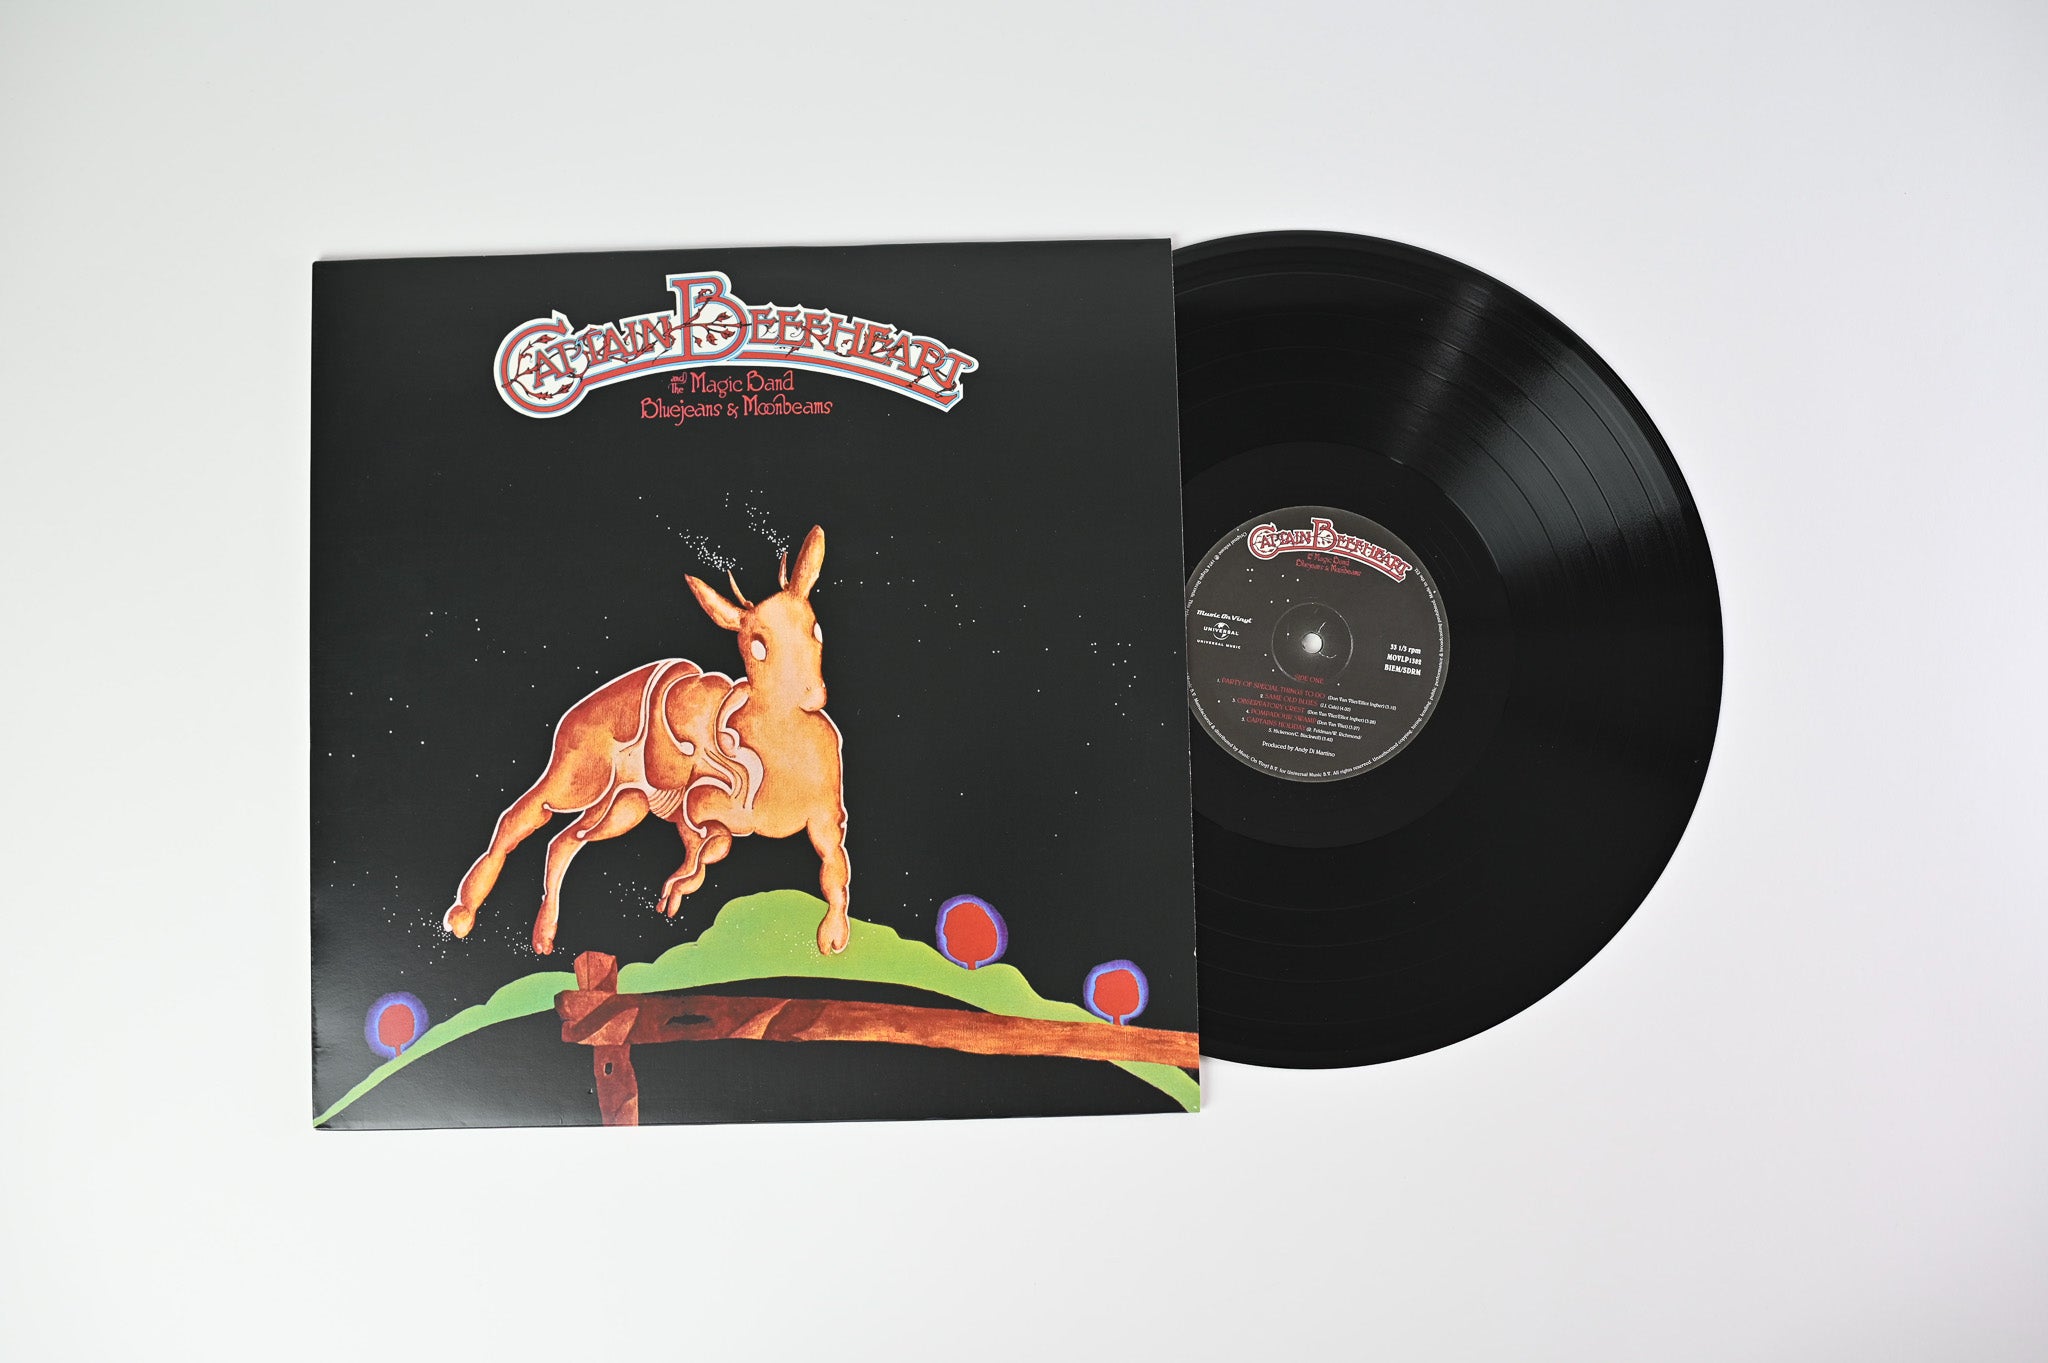 Captain Beefheart - Bluejeans & Moonbeams Reissue on Music On Vinyl